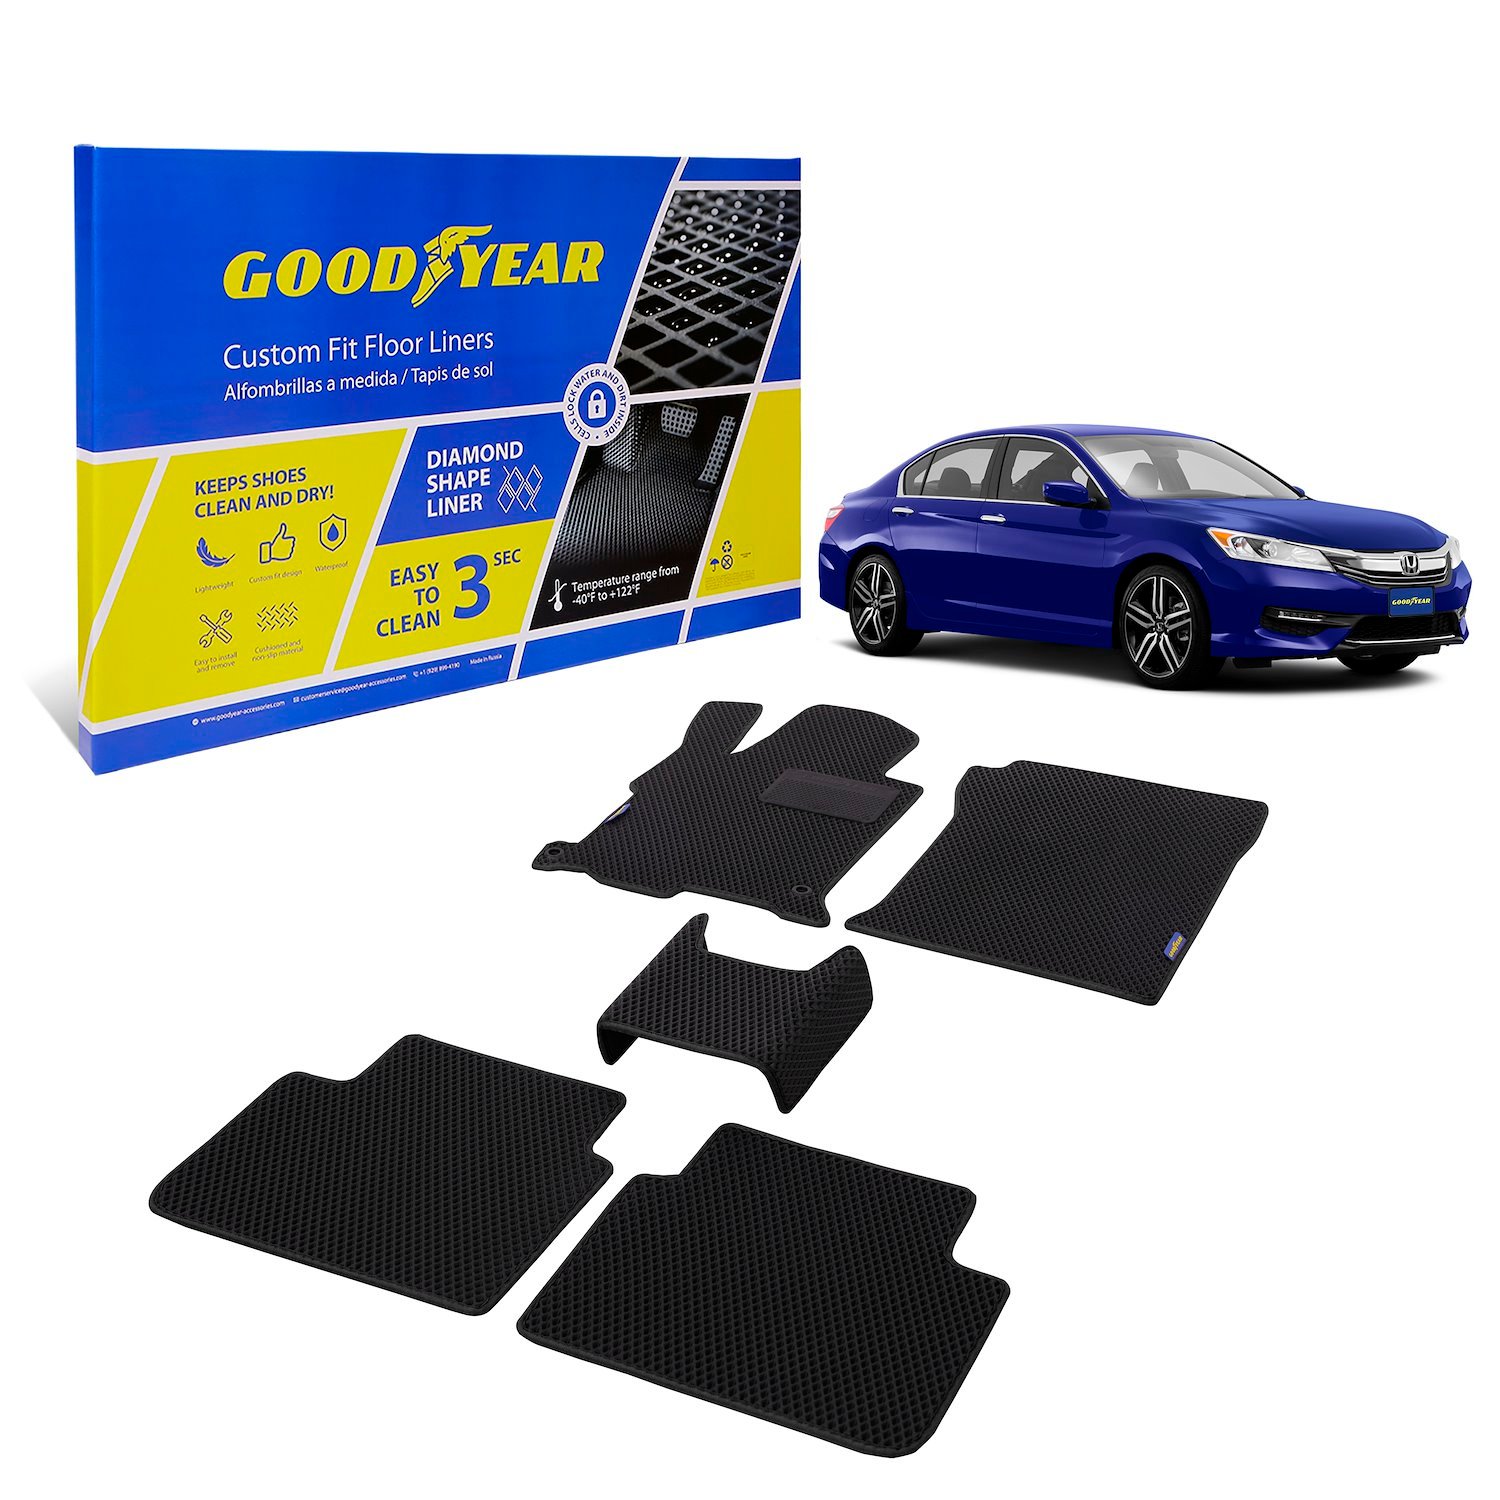 Goodyear Custom-Fit Floor Liners for 2013-2017 Honda Accord Sedan